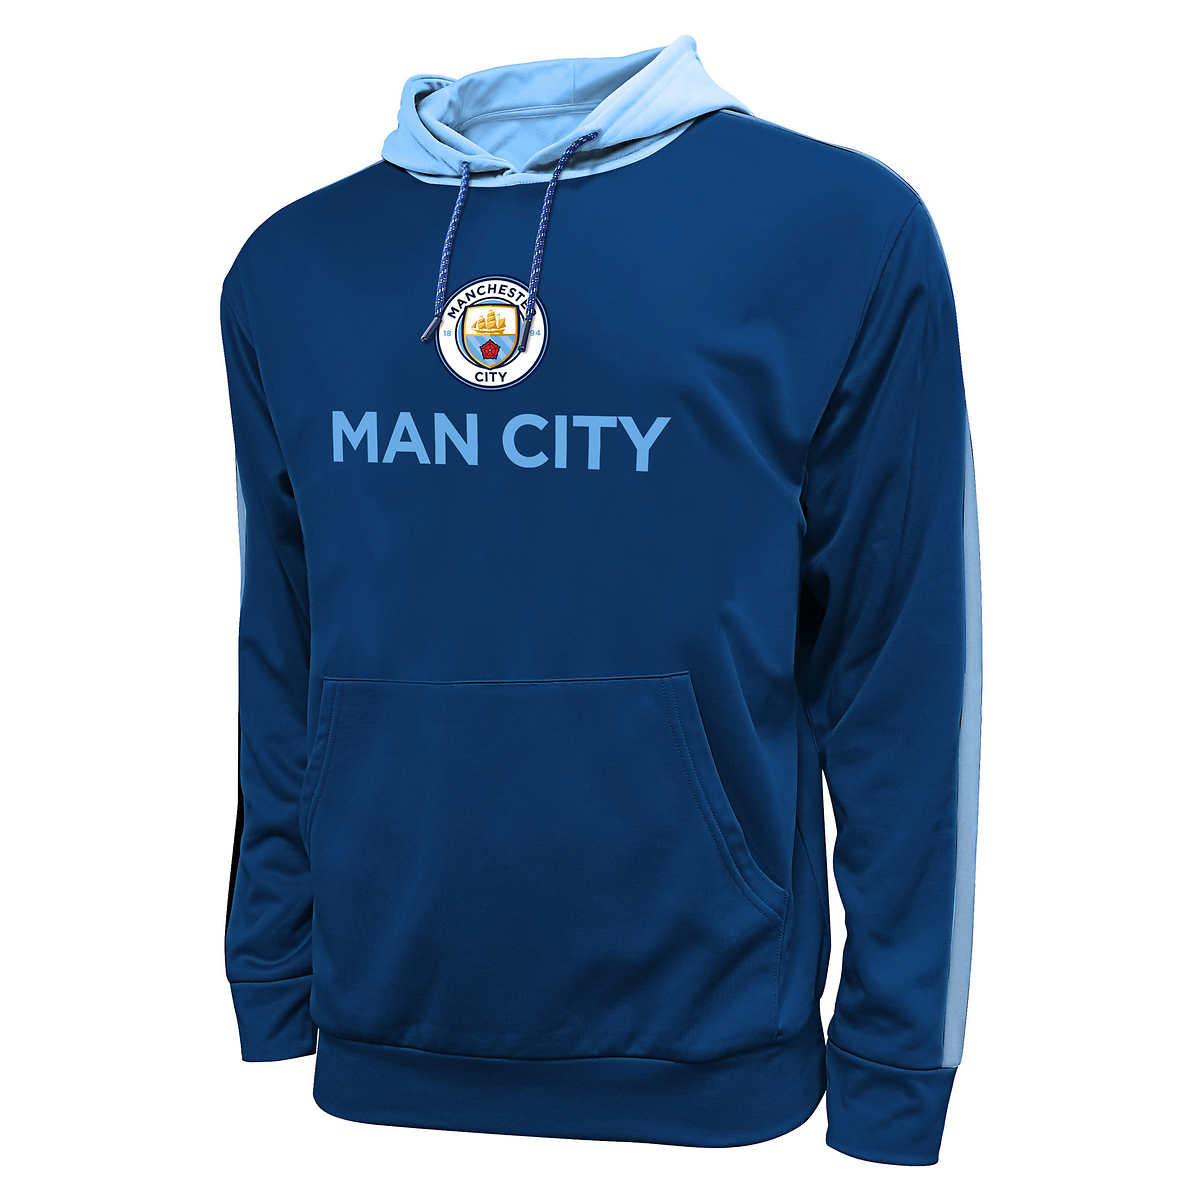 Manchester City FC Official Patch Football/Soccer Crest Duvet Cover Bedding Set Sky Blue Full